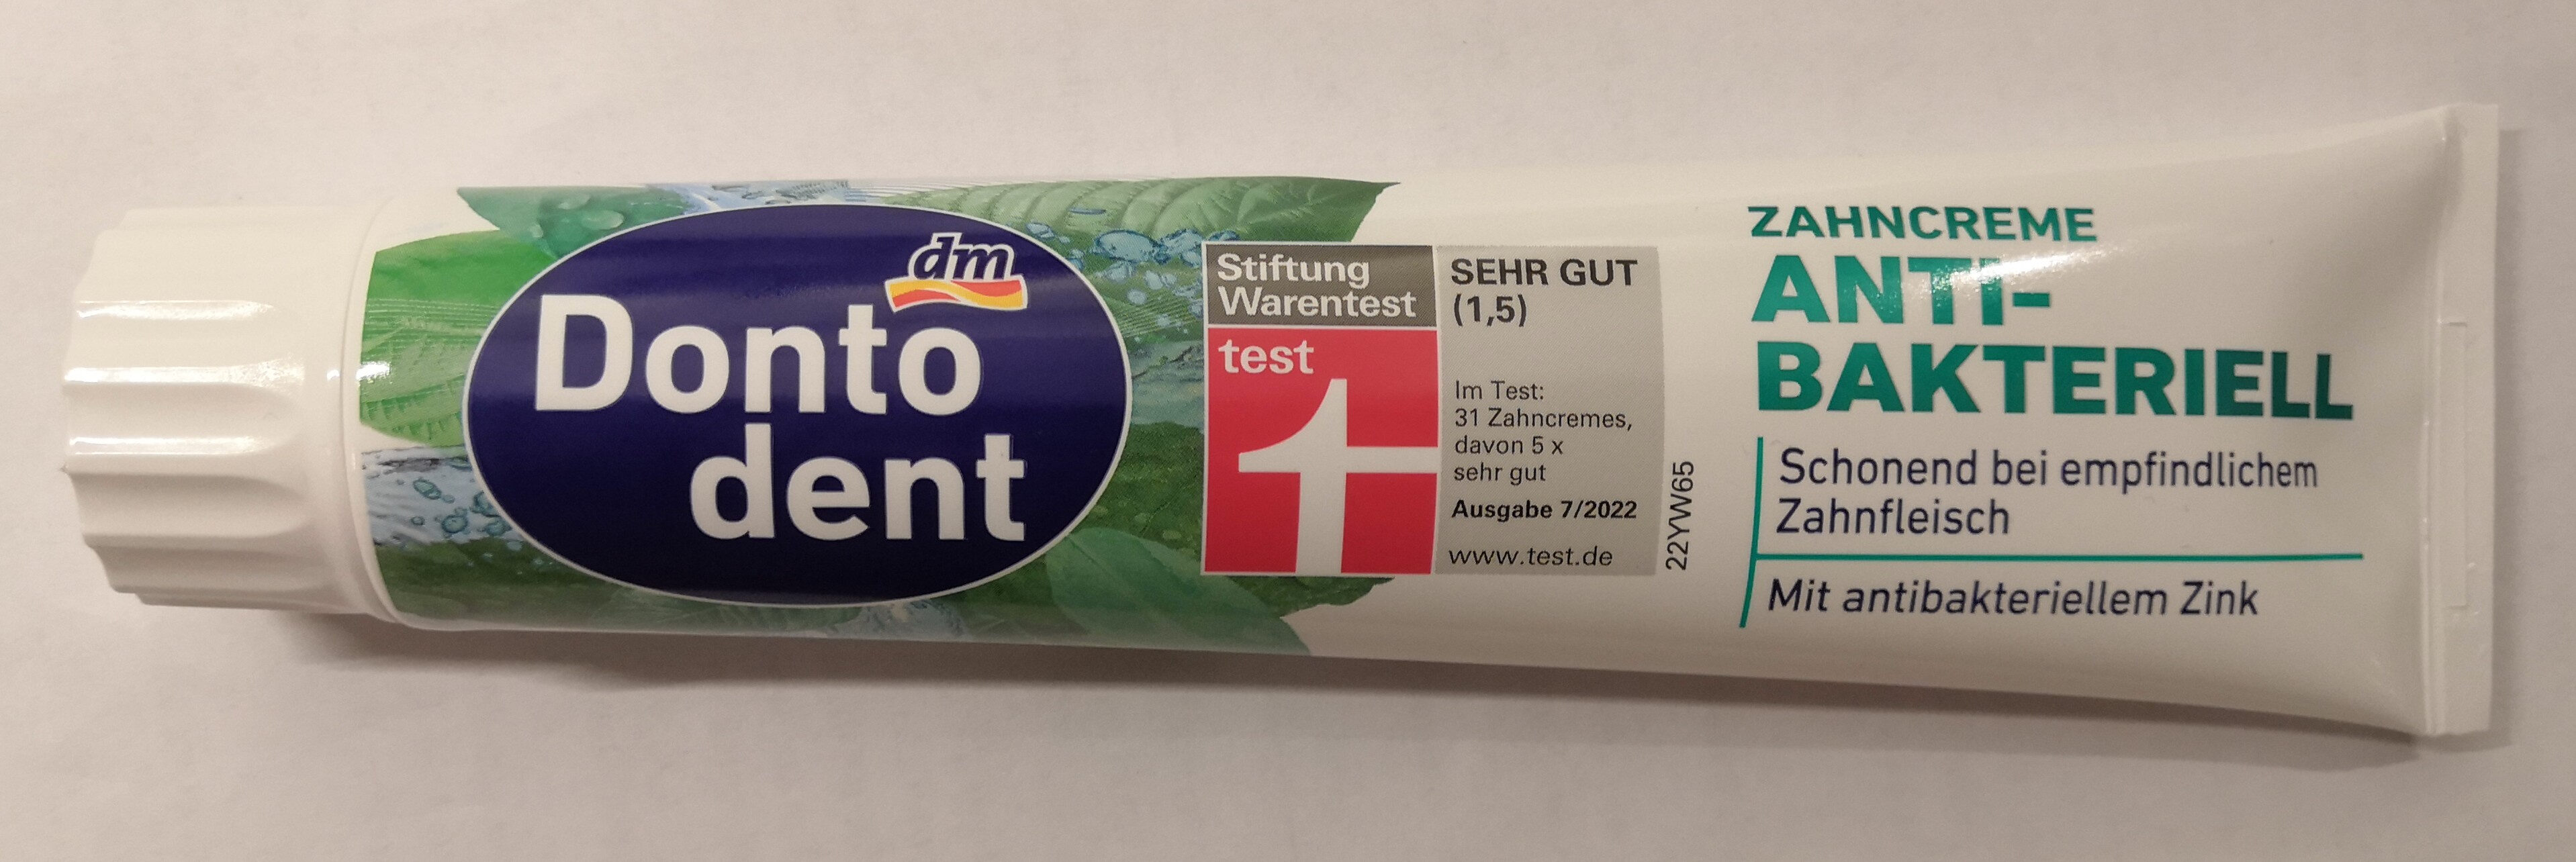 Dontodent Zahncreme Antibakteriell - Produkto - de